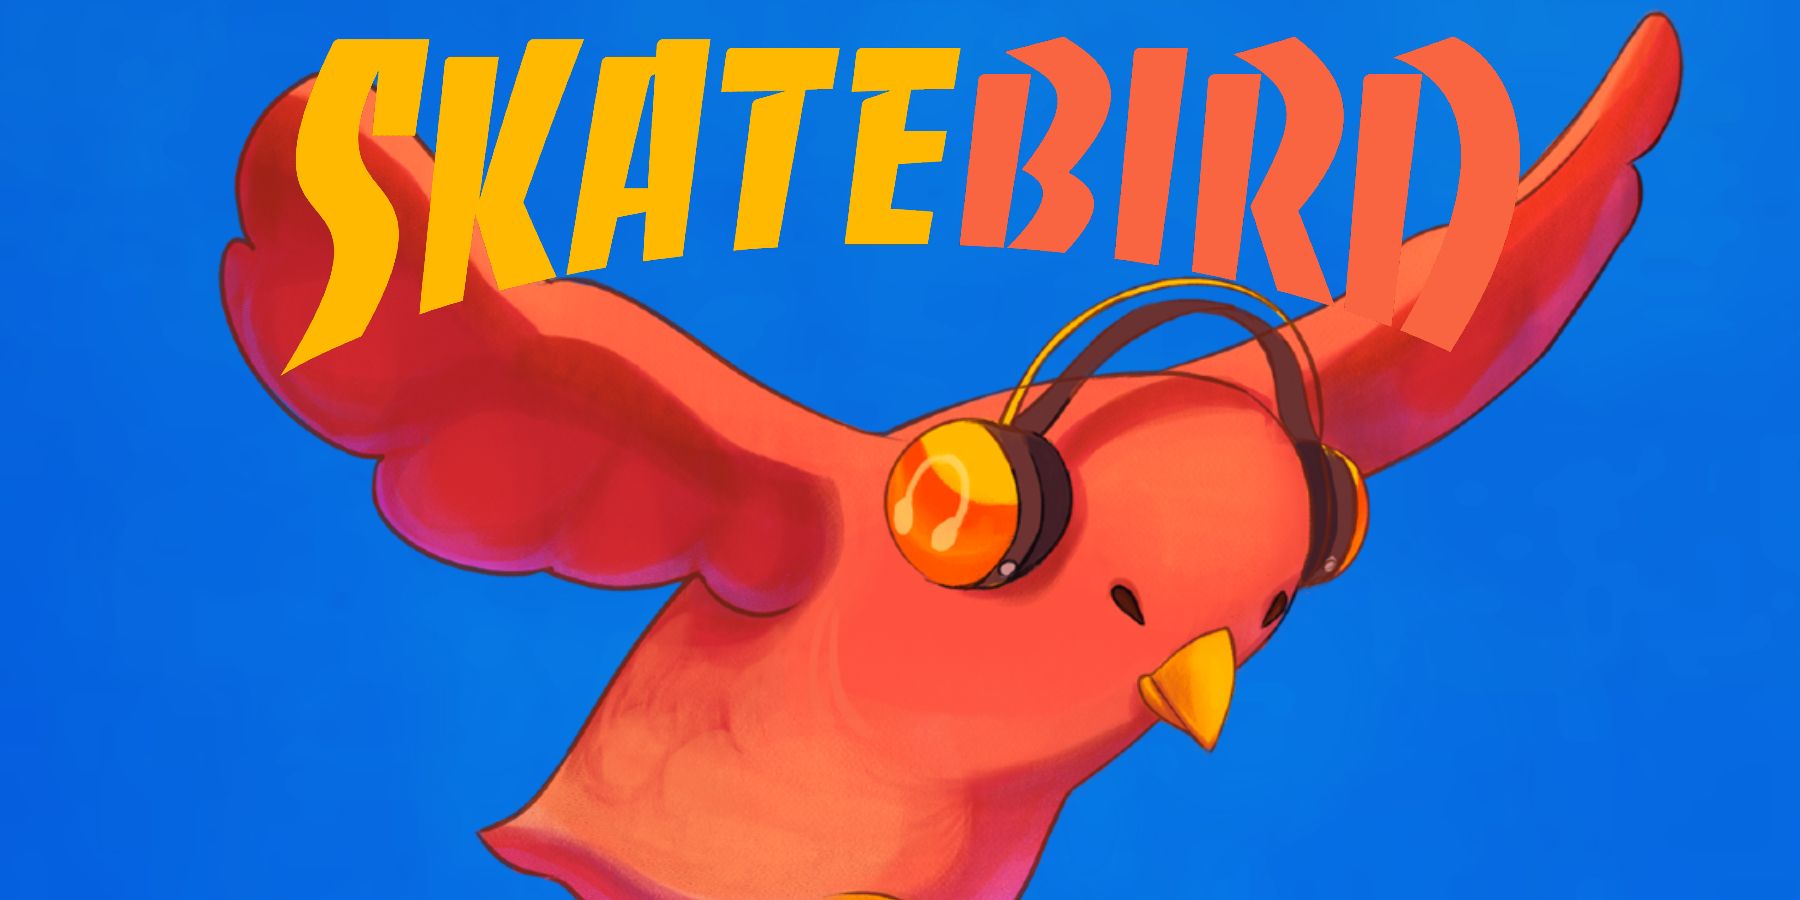 Skatebird bird with headphones art